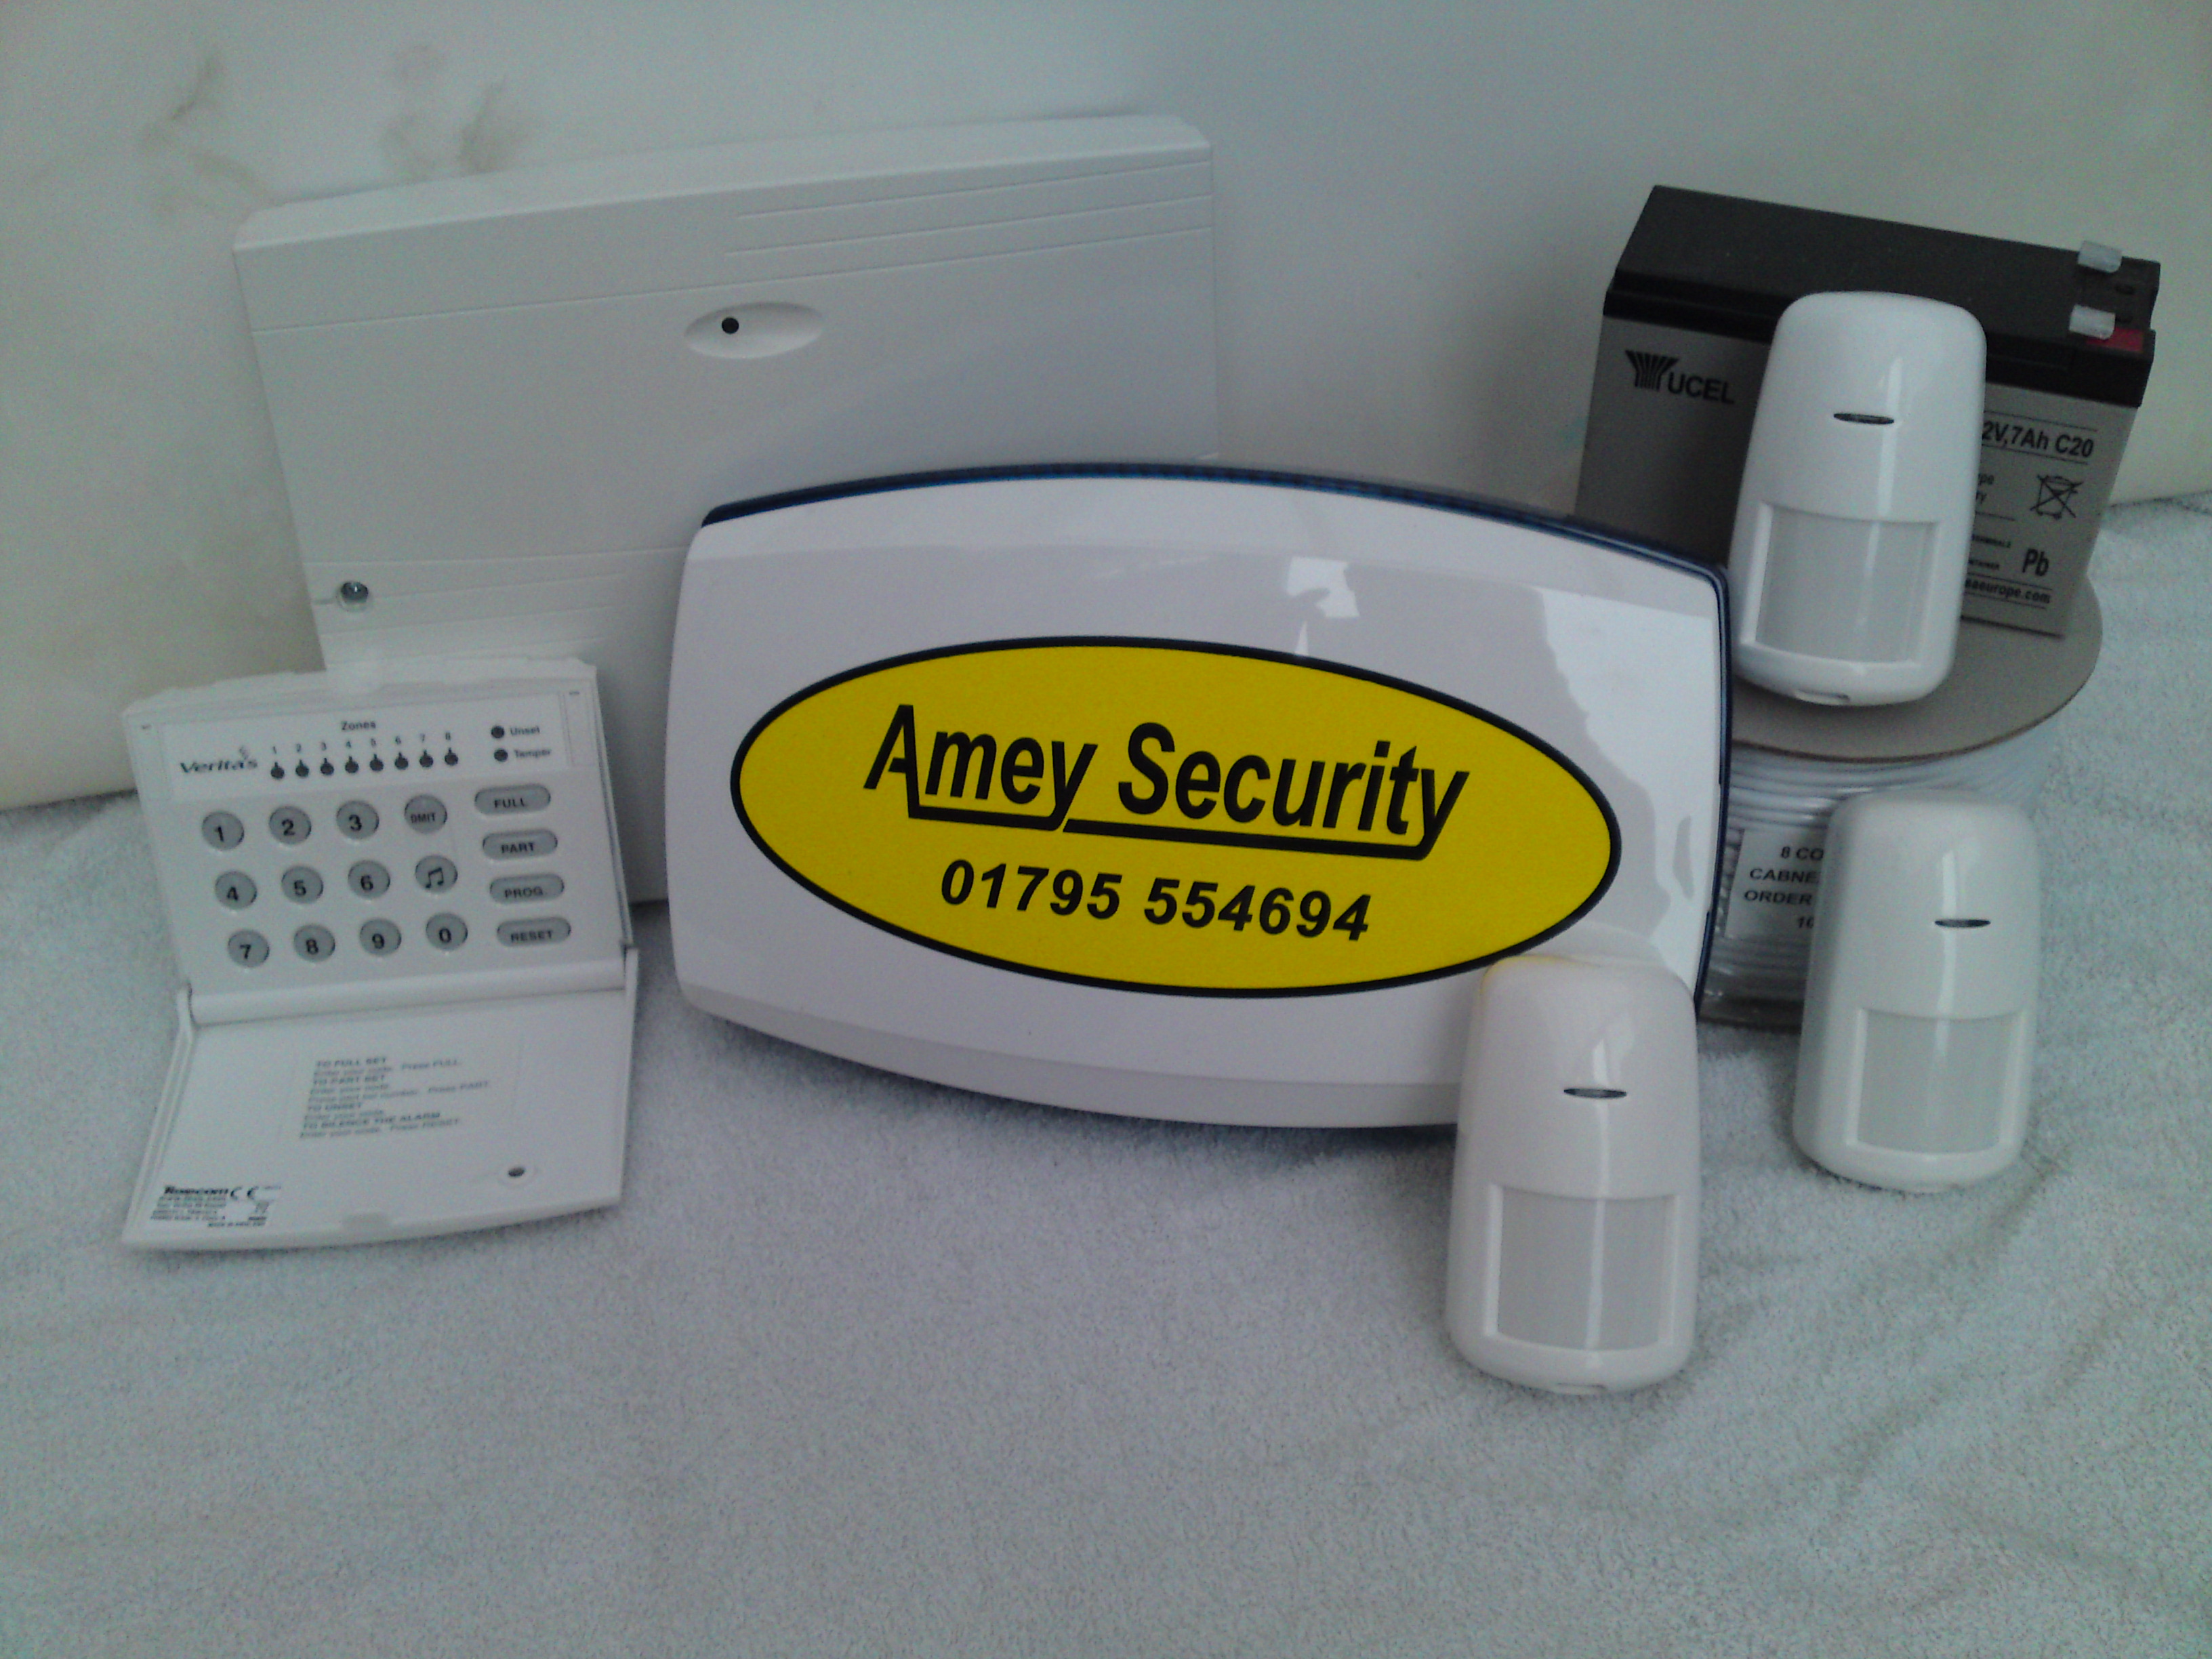 Budget amey security burglar alarm system